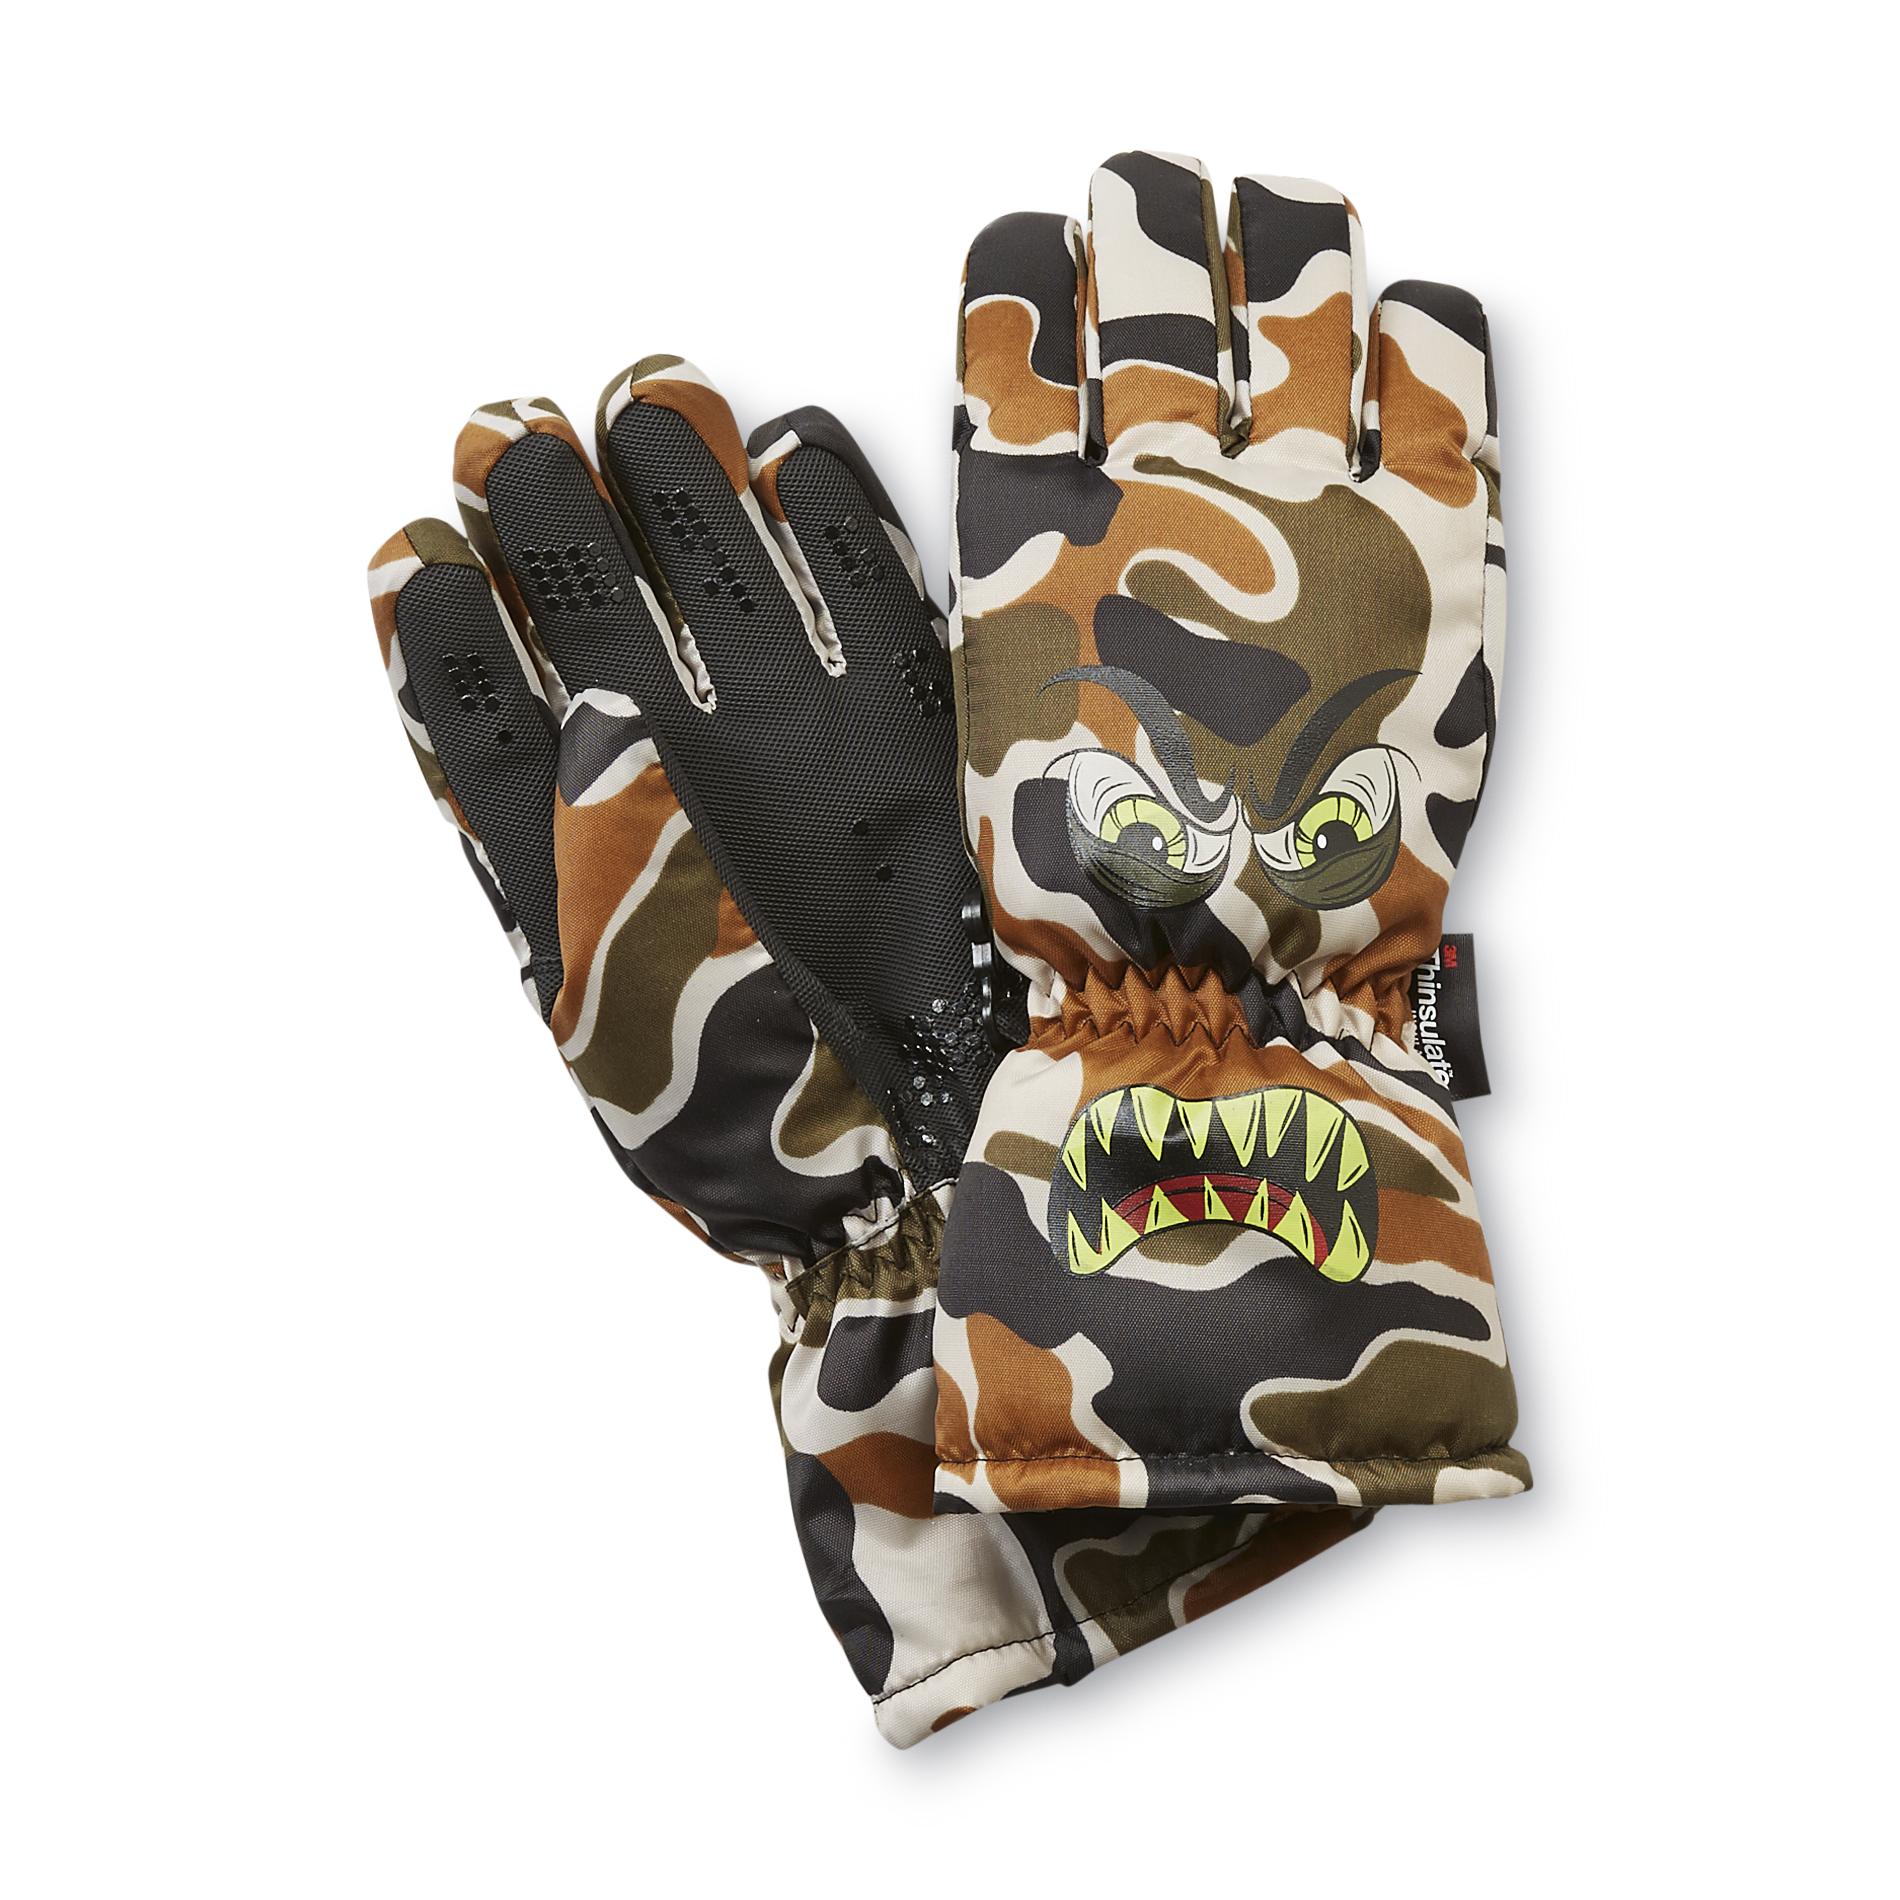 Athletech Boy's Graphic Ski Gloves - Camouflage Monster